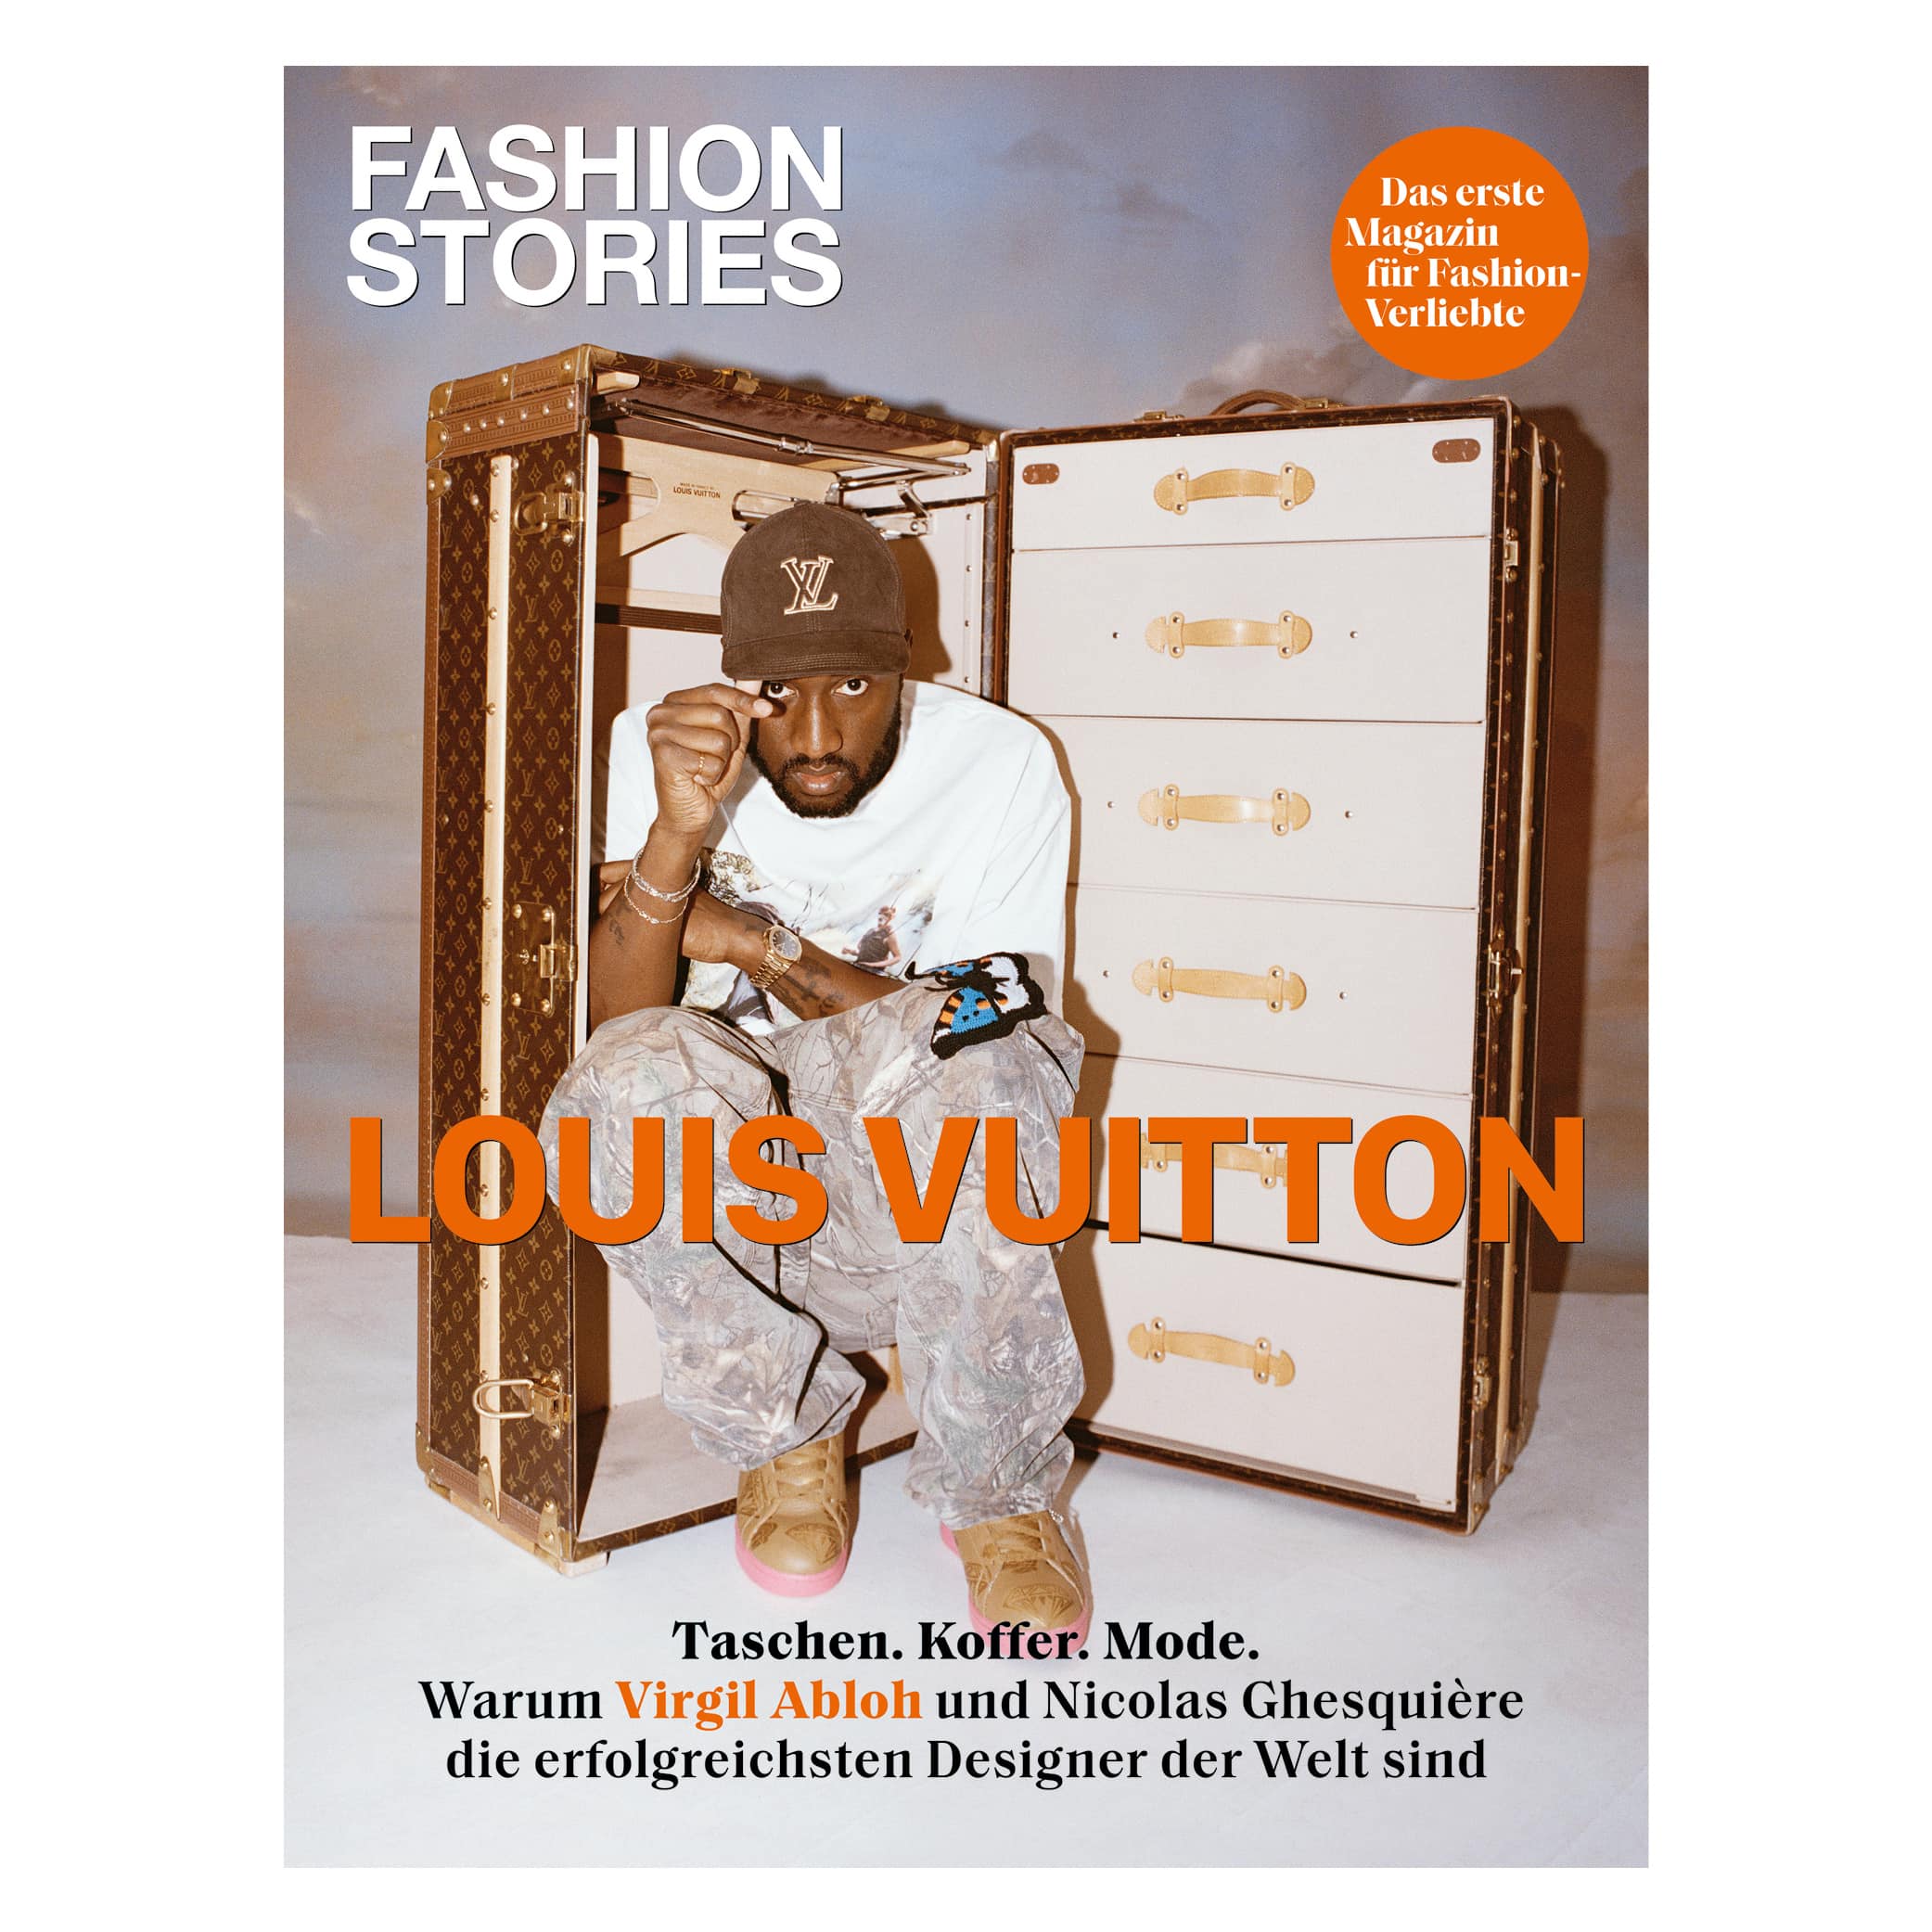 Fashion Stories "Louis Vuitton"